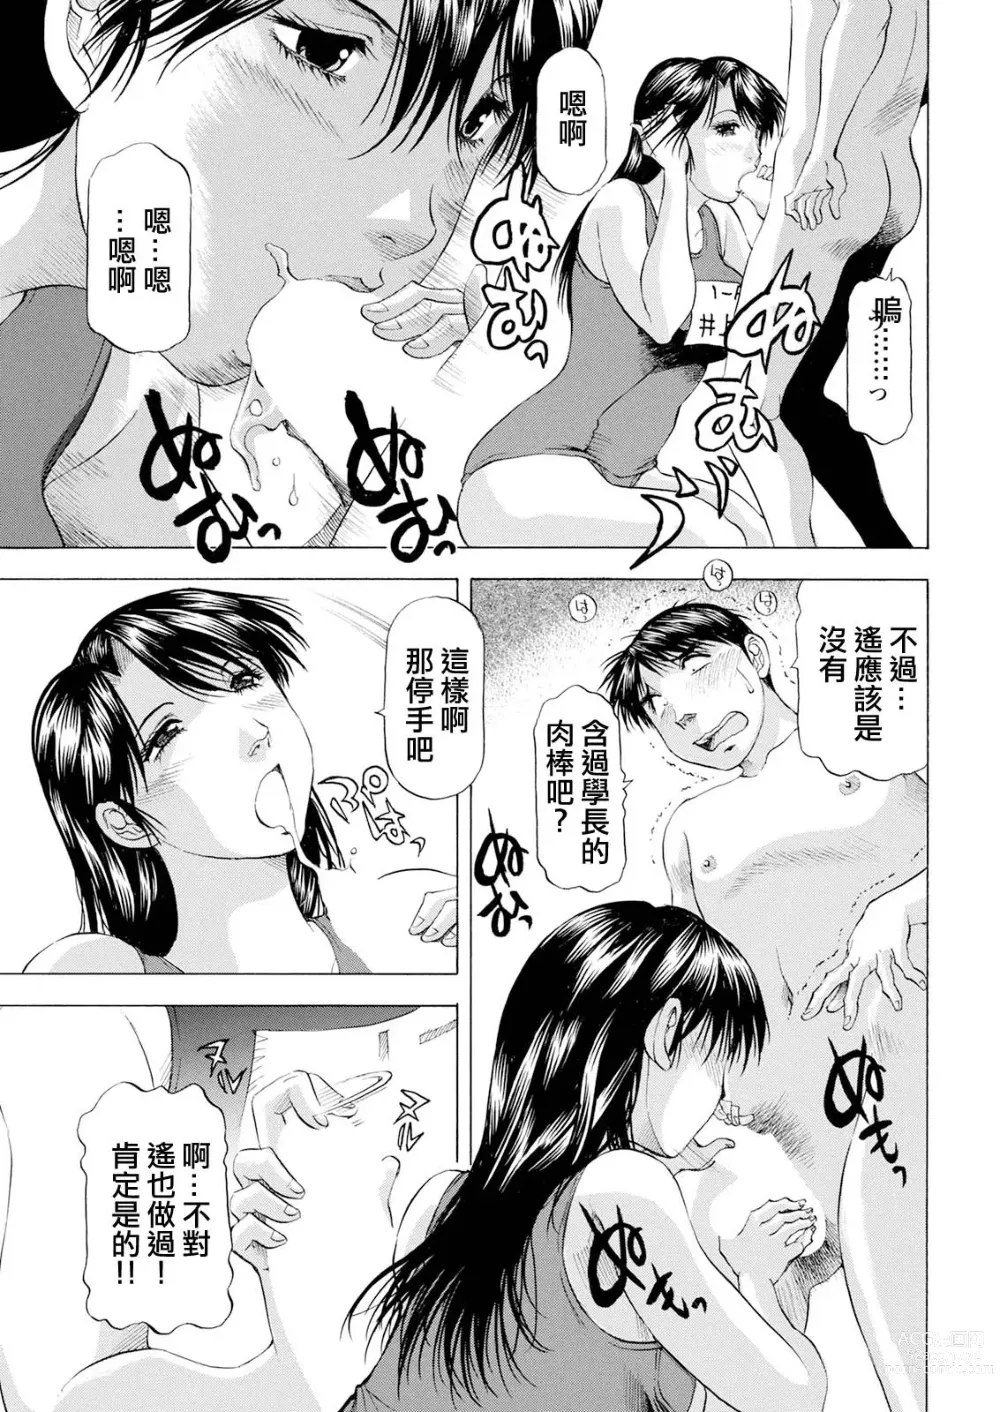 Page 7 of manga S.S.T